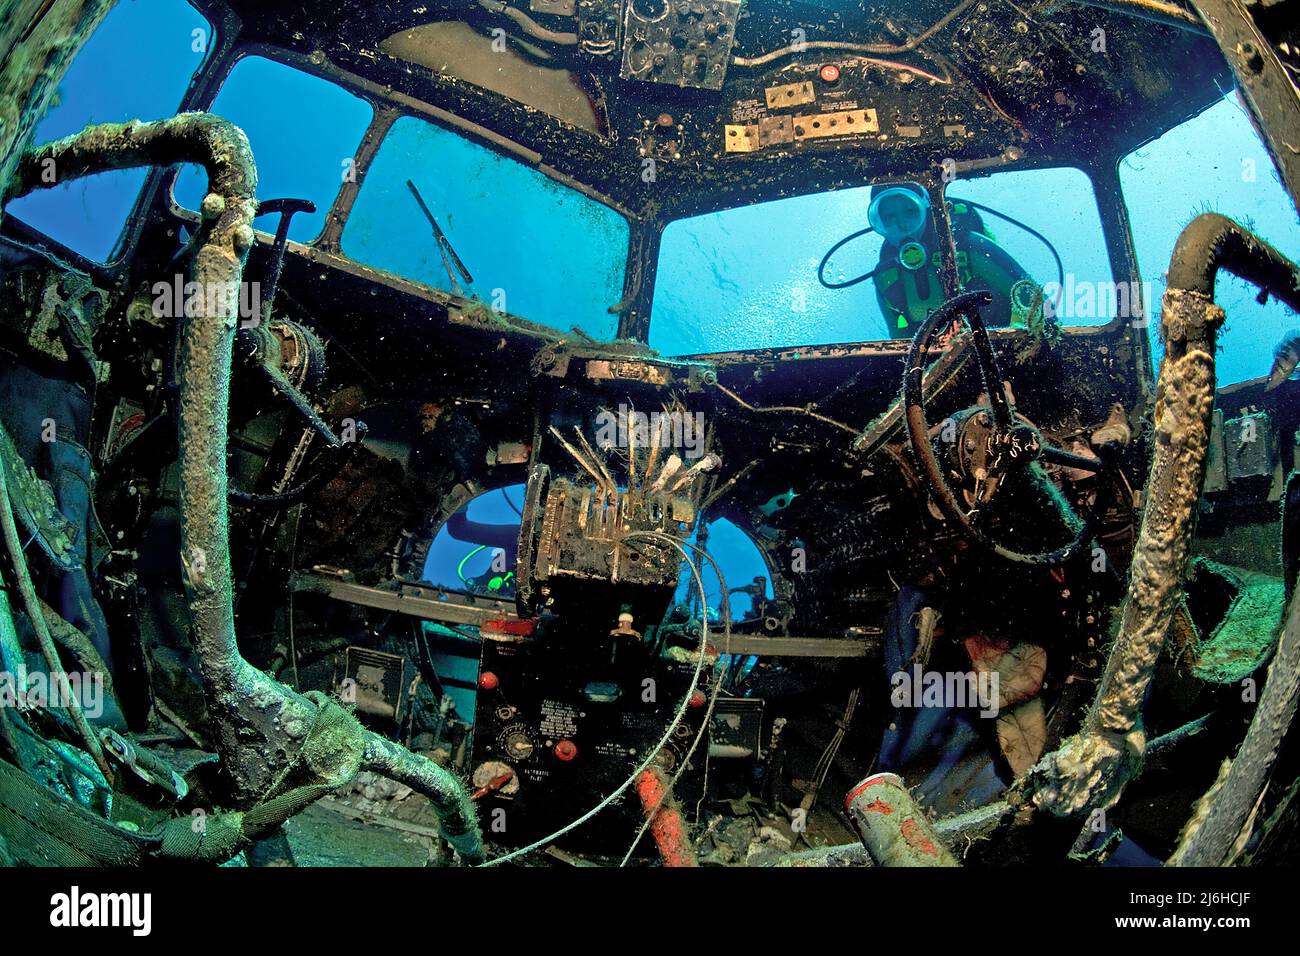 Cockpit of Douglas C-47, Dakota, airfreighter, transport plane, military version of the DC-3, was sunken for scuba divers, Bodrum, Turkey Stock Photo